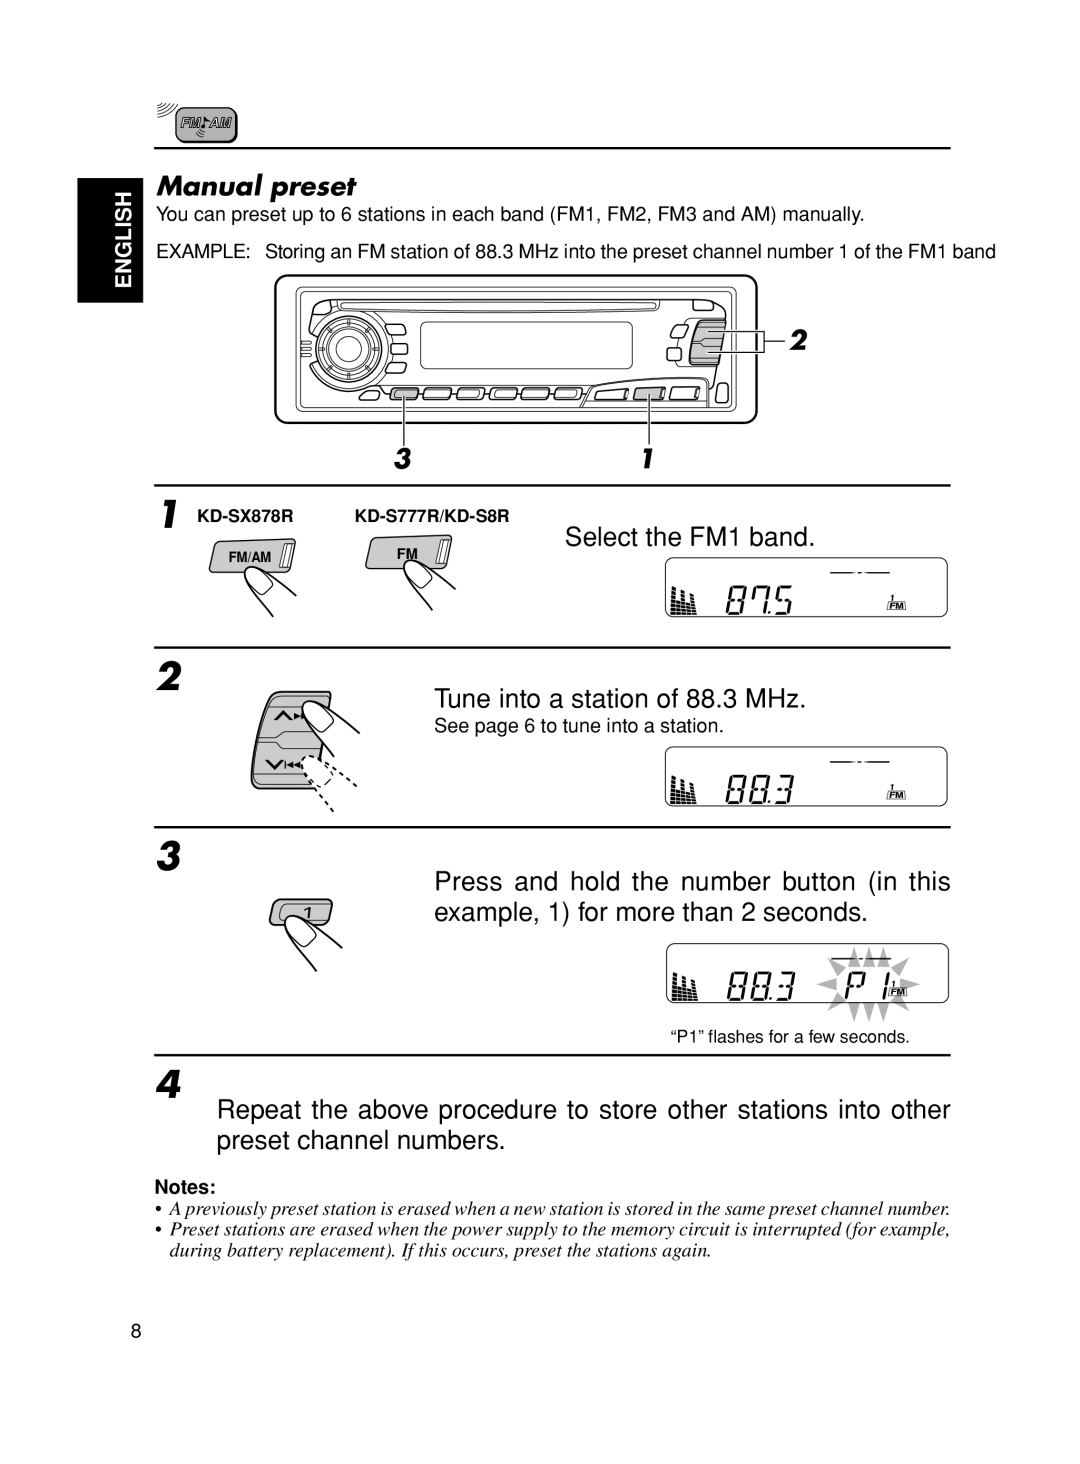 JVC KD-S8R manual Manual preset, Select the FM1 band 